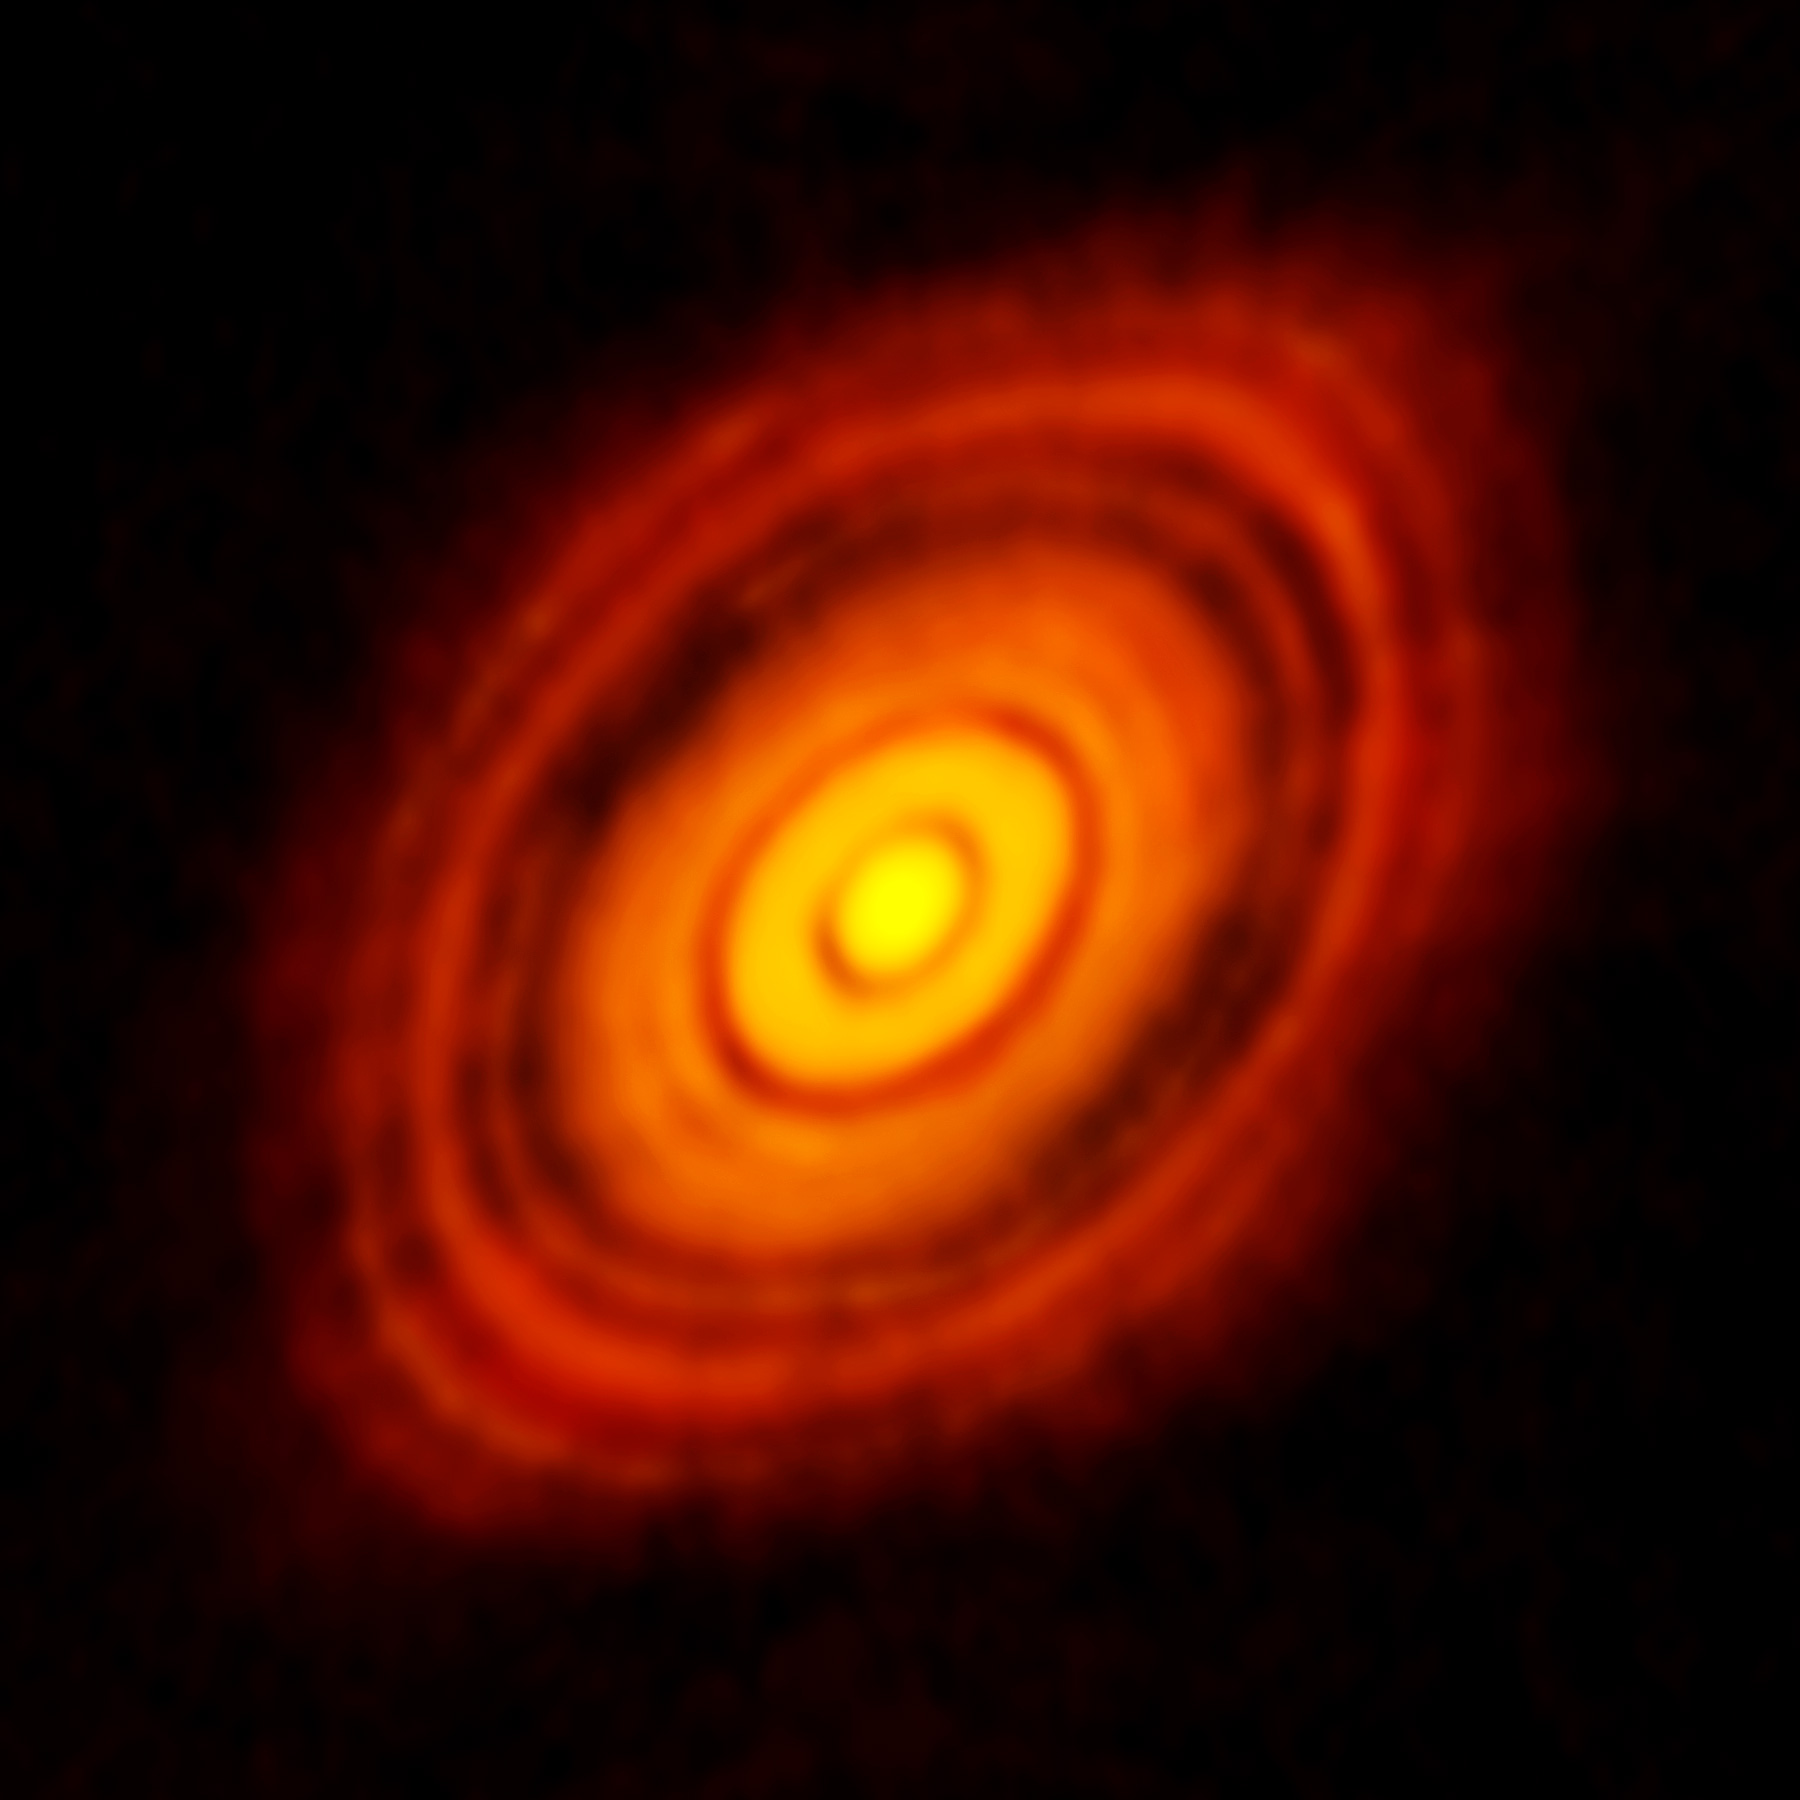 CC BY 4.0 ALMA Observatory